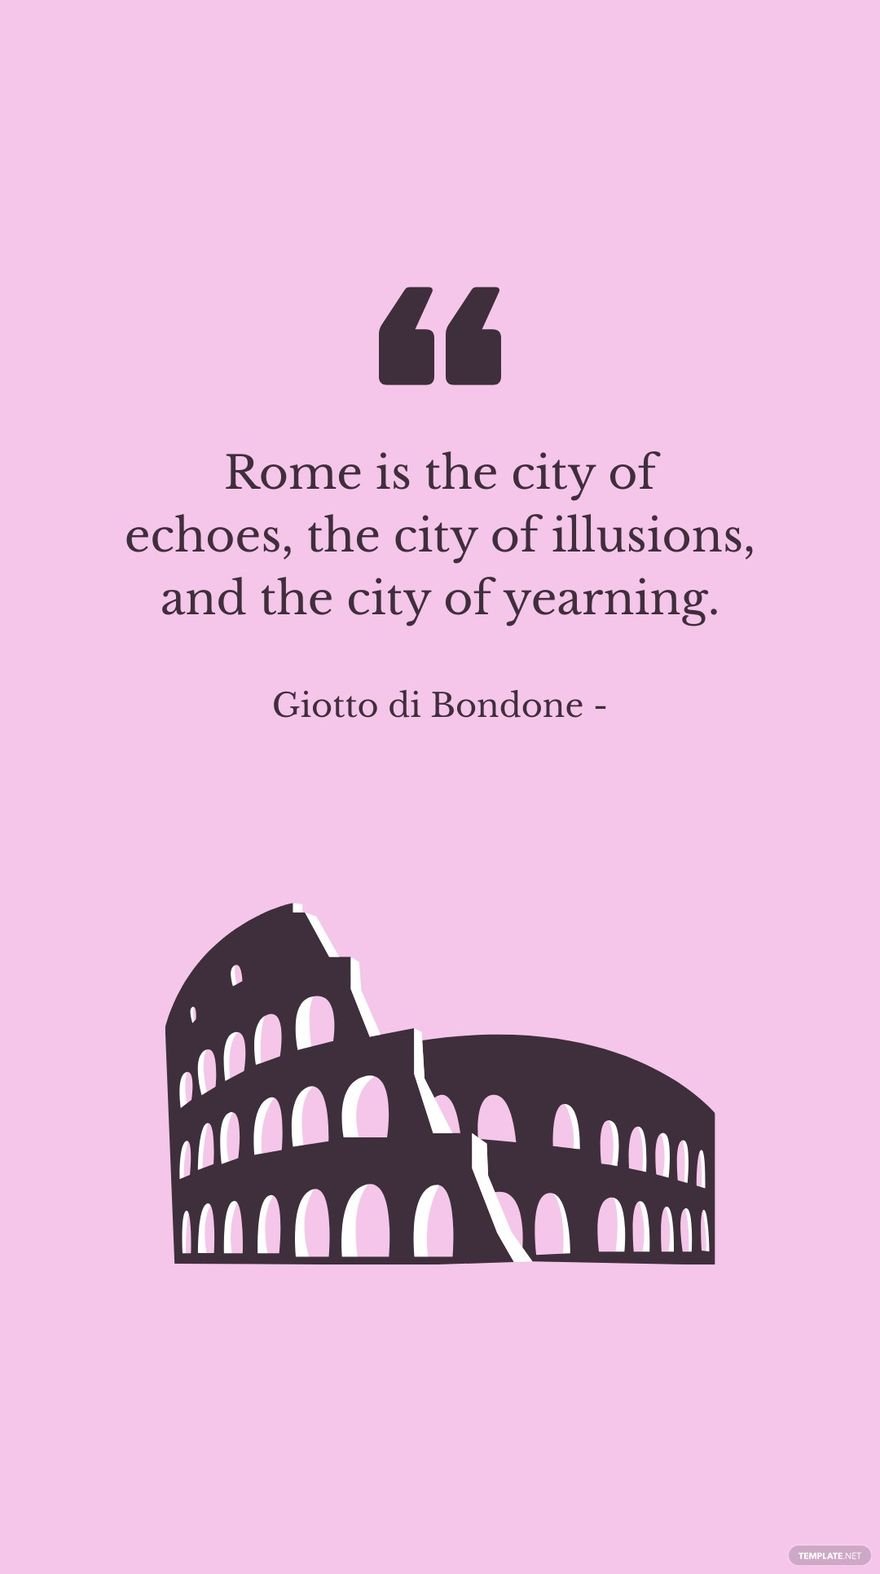 Free Giotto di Bondone - Rome is the city of echoes, the city of illusions, and the city of yearning. in JPG